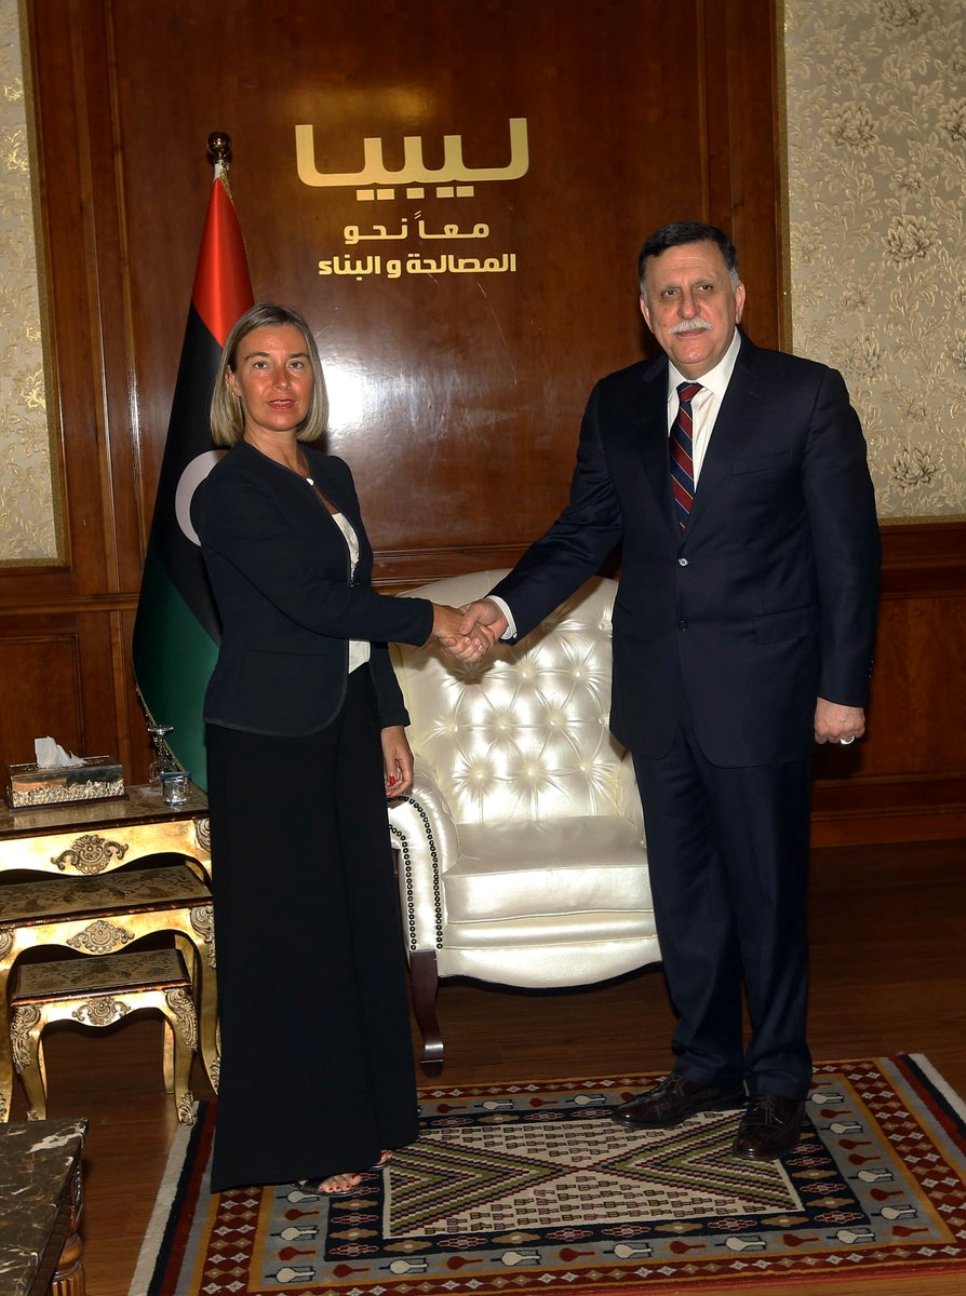 EU High Representative Federica Mogherini meets with Libyan Prime Minister Fayez Sarraj